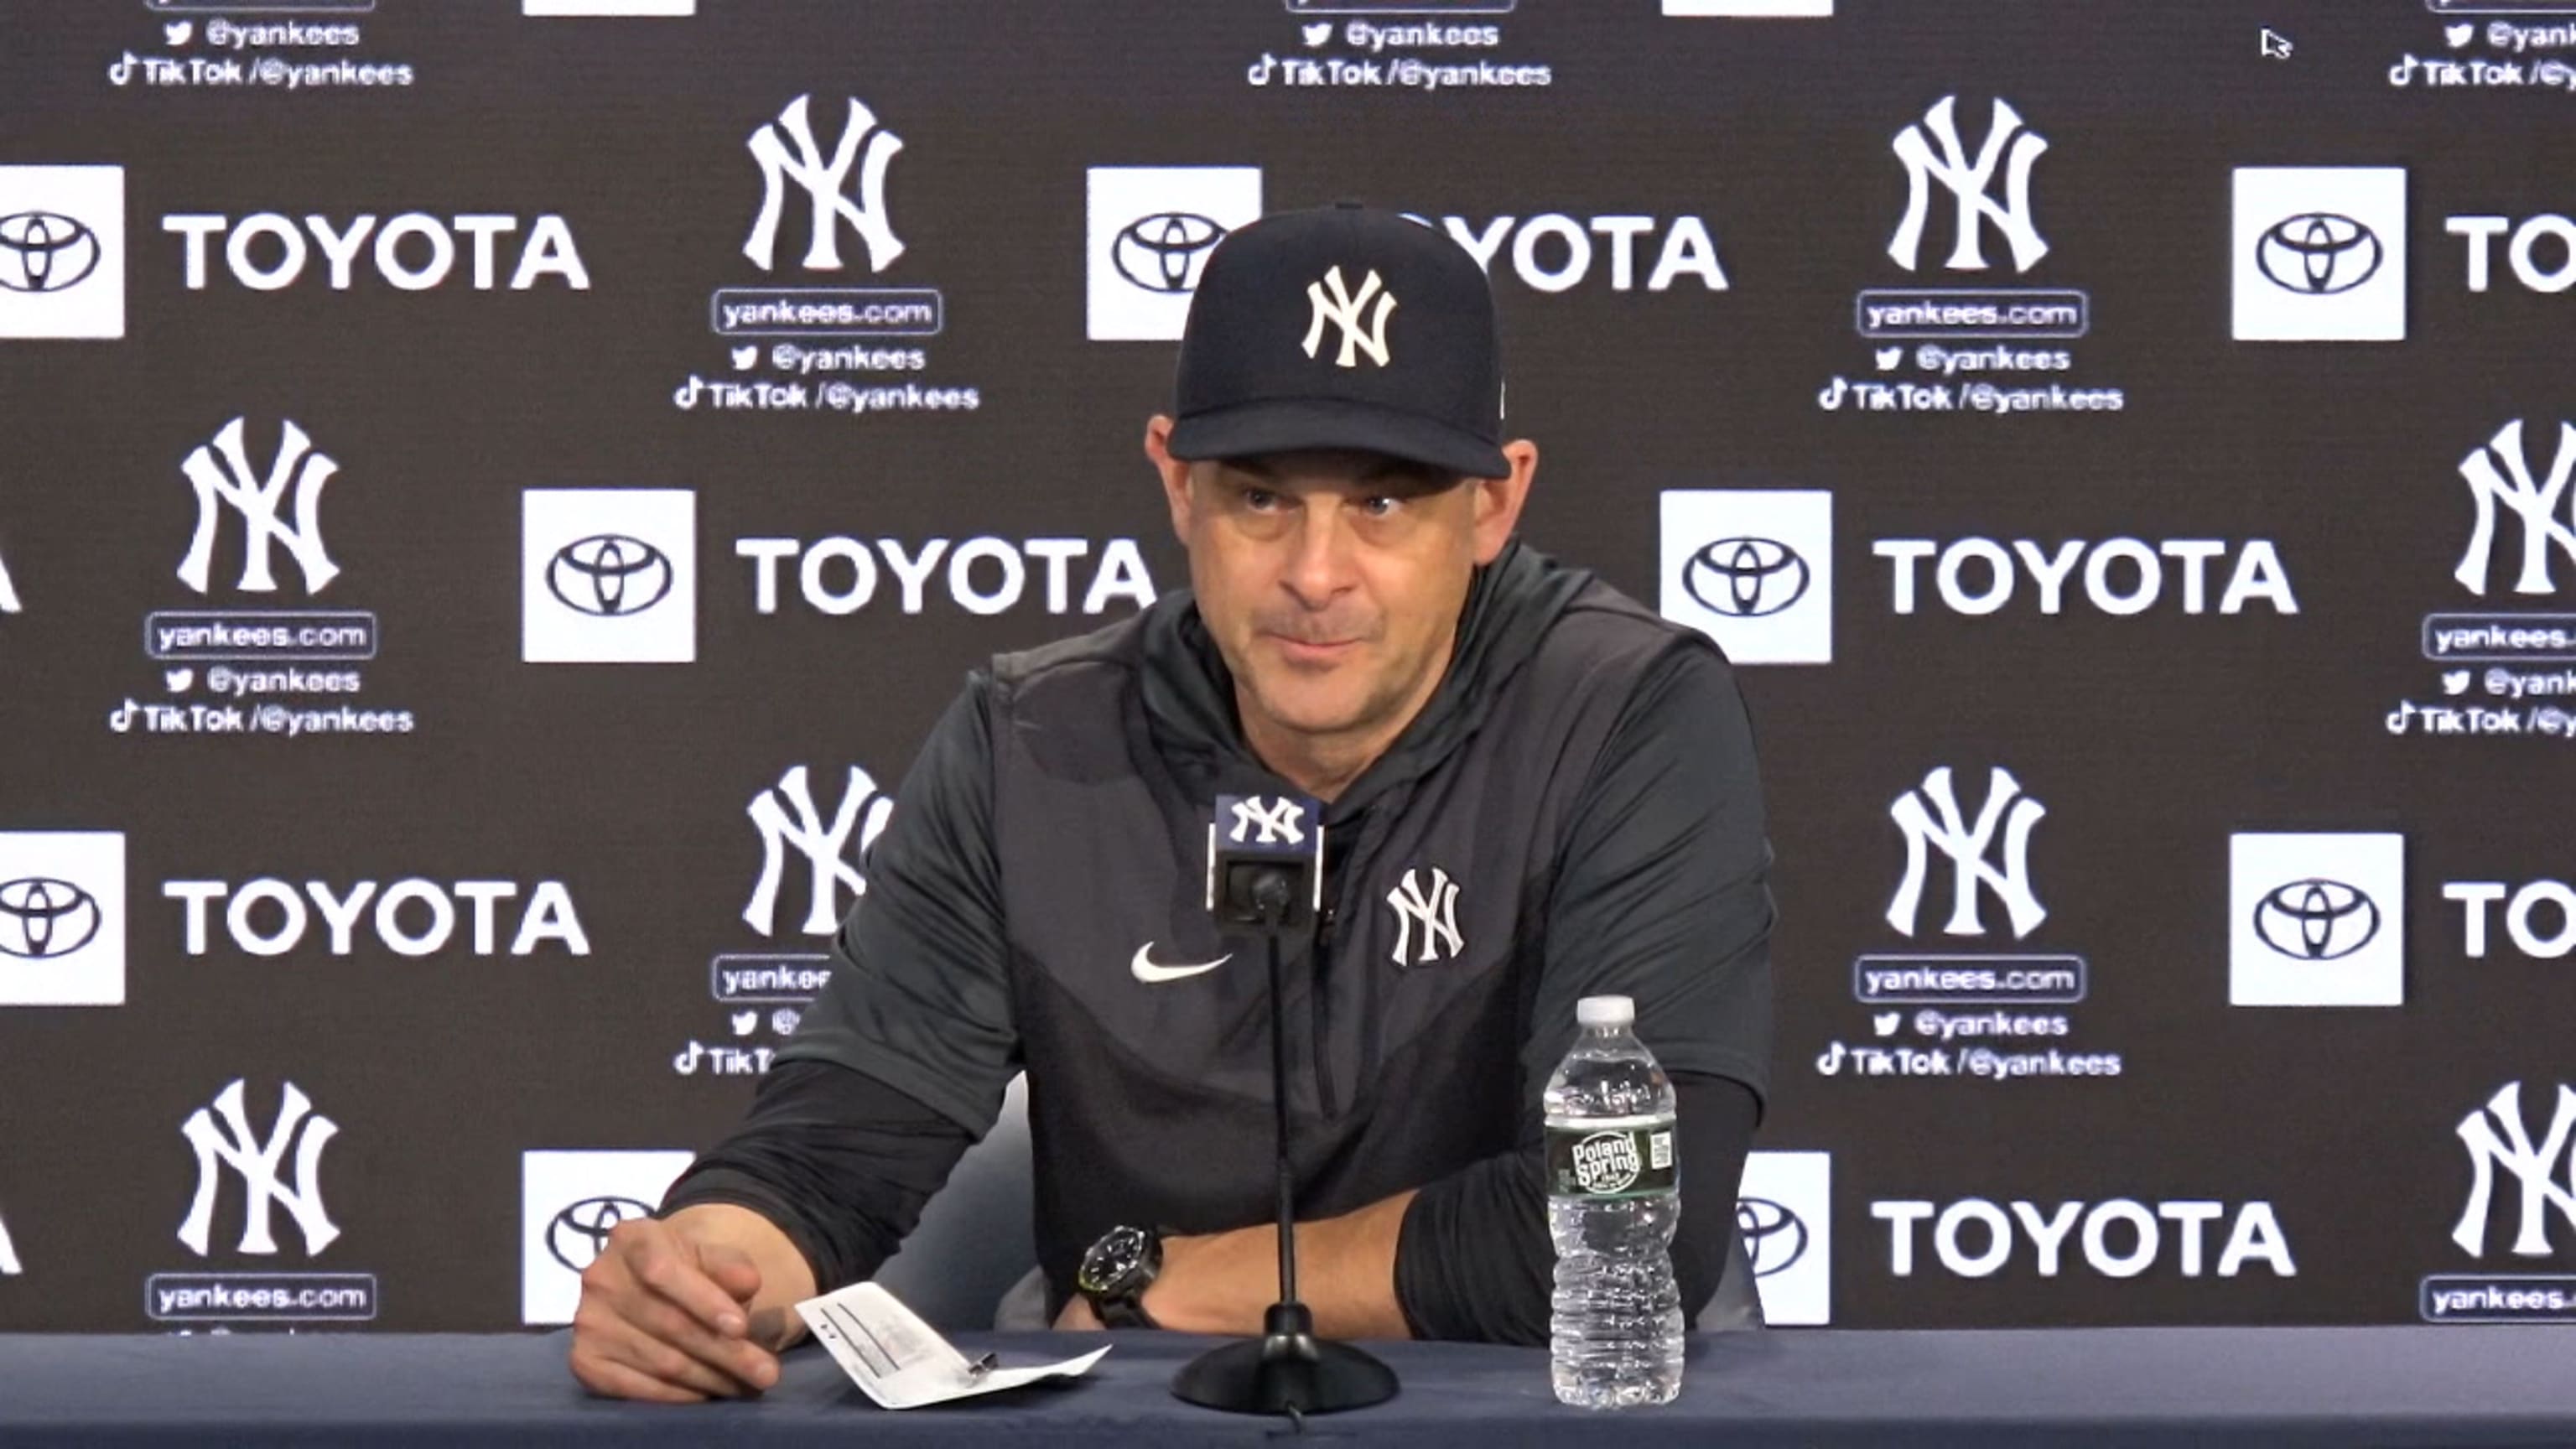 Giancarlo Stanton launches walk-off HR, caps New York Yankees comeback